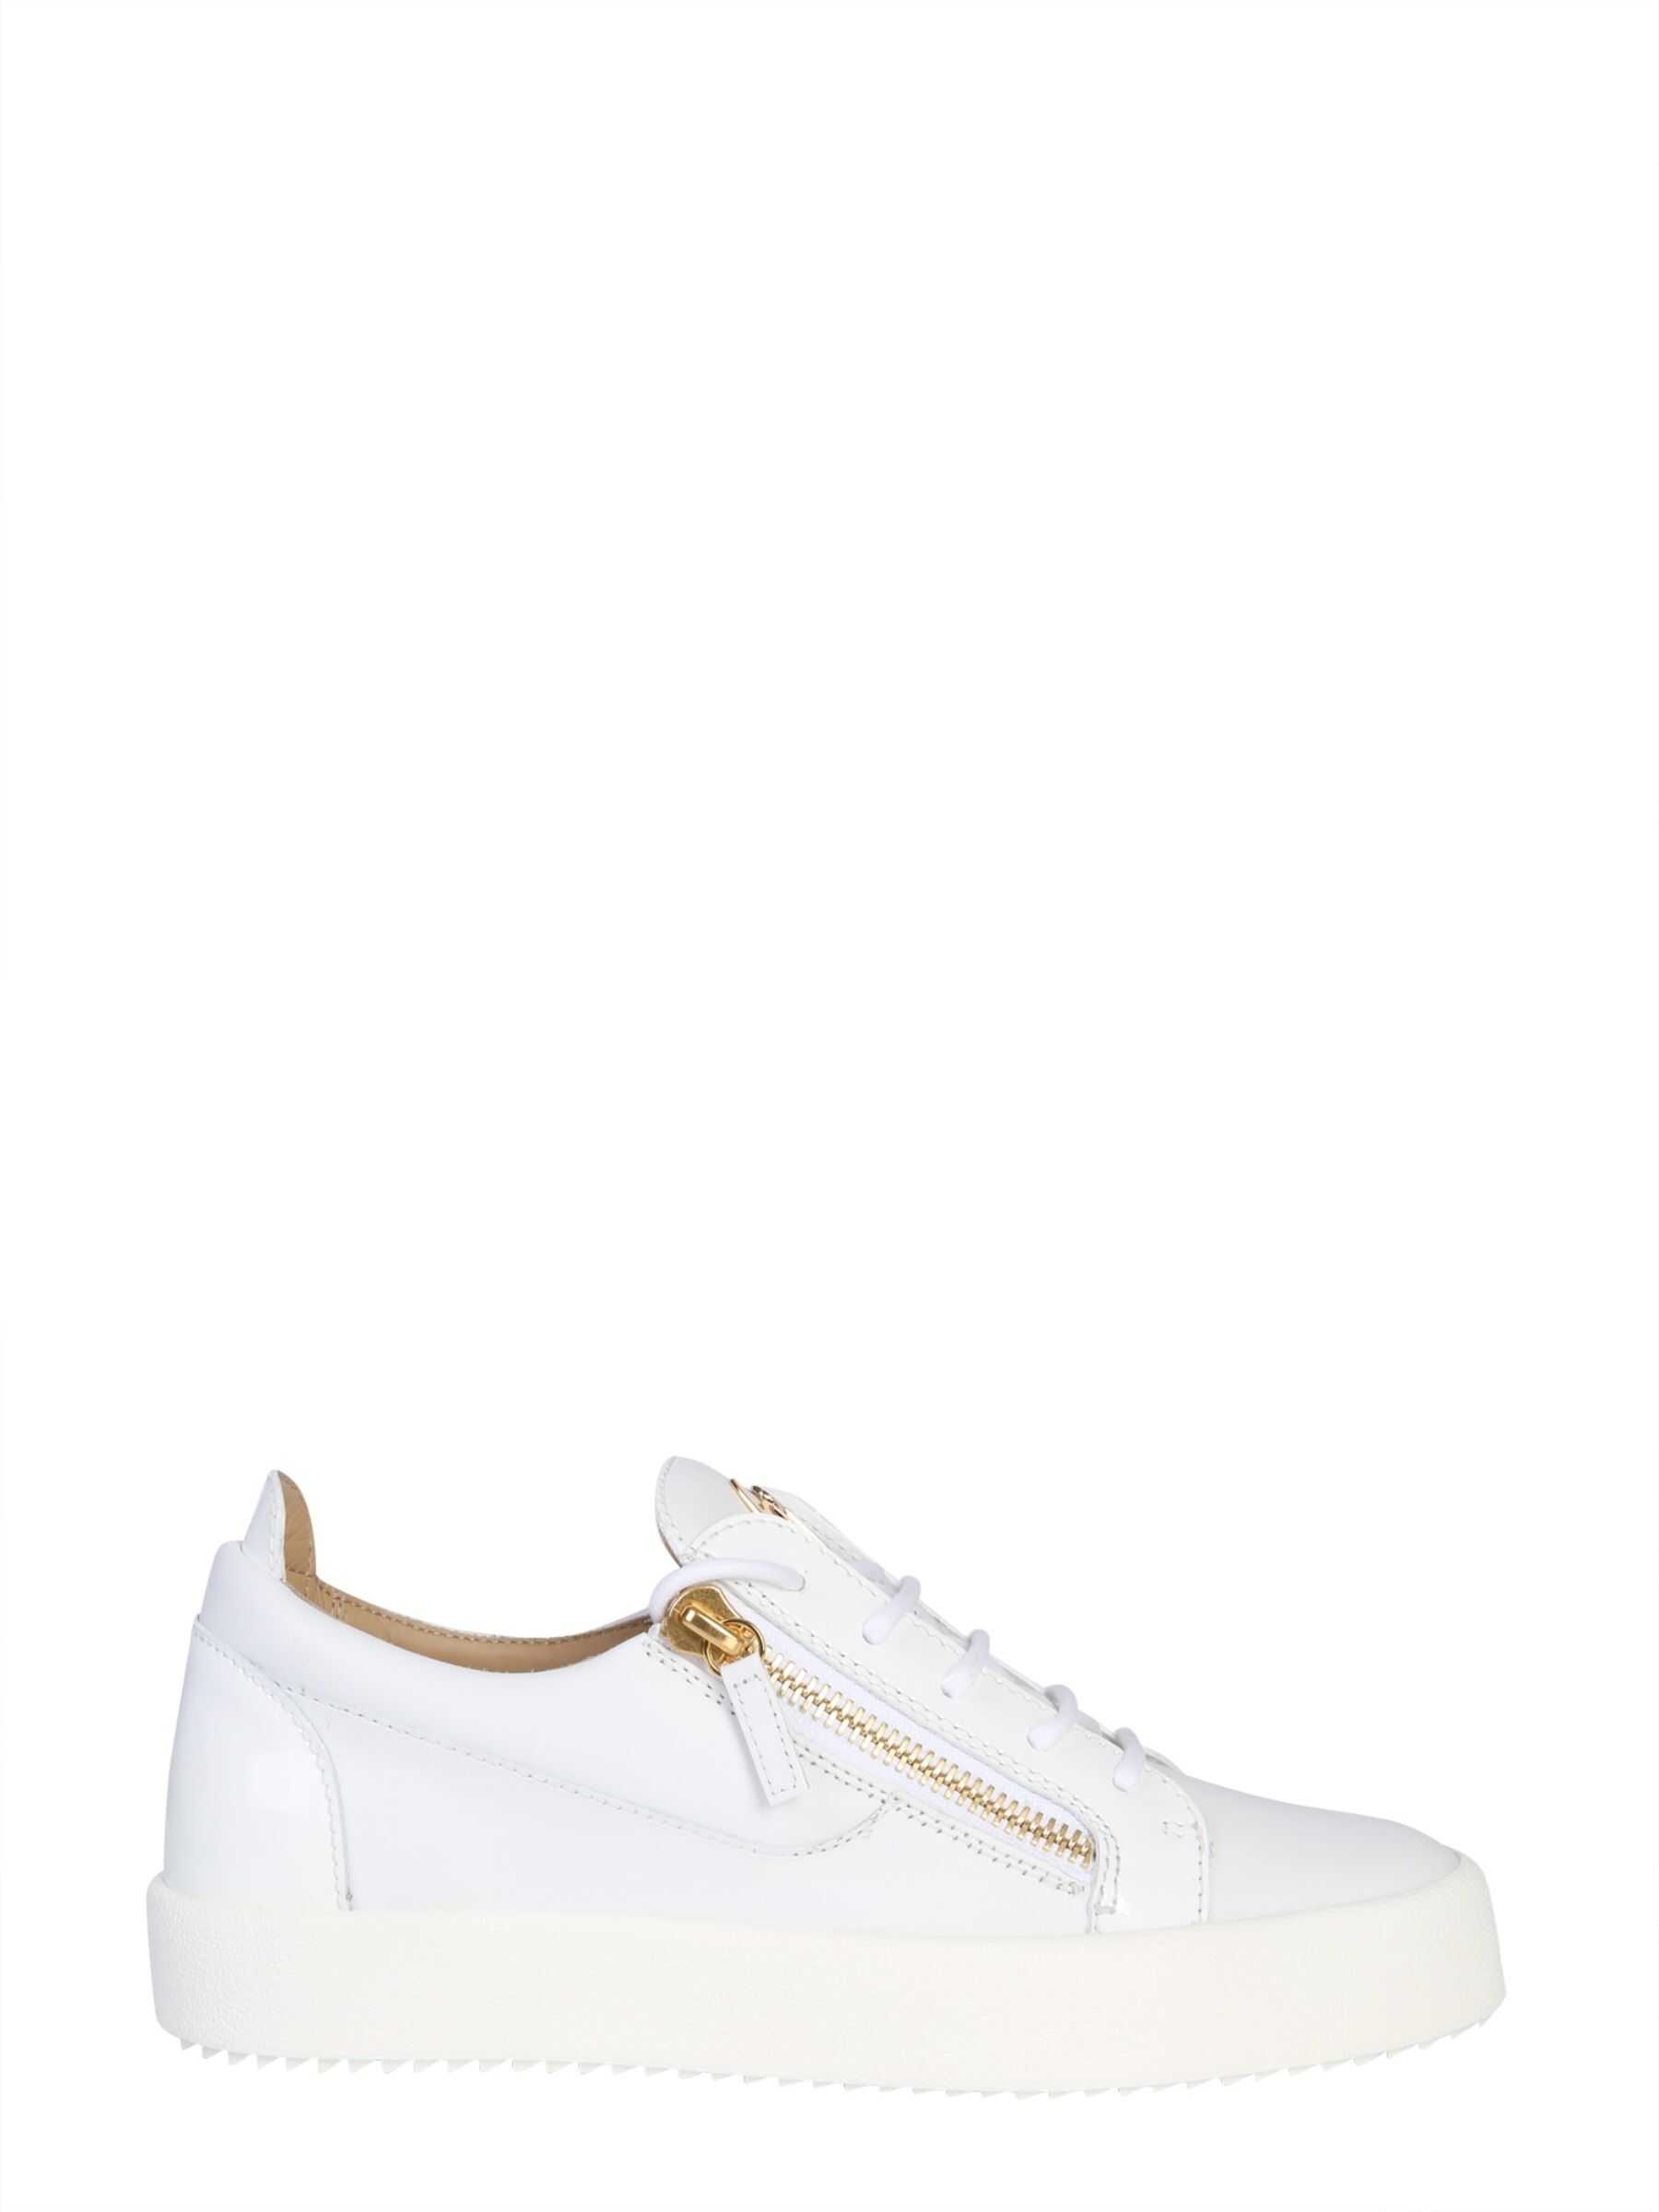 Giuseppe Zanotti Frankie Low-Top Sneakers WHITE